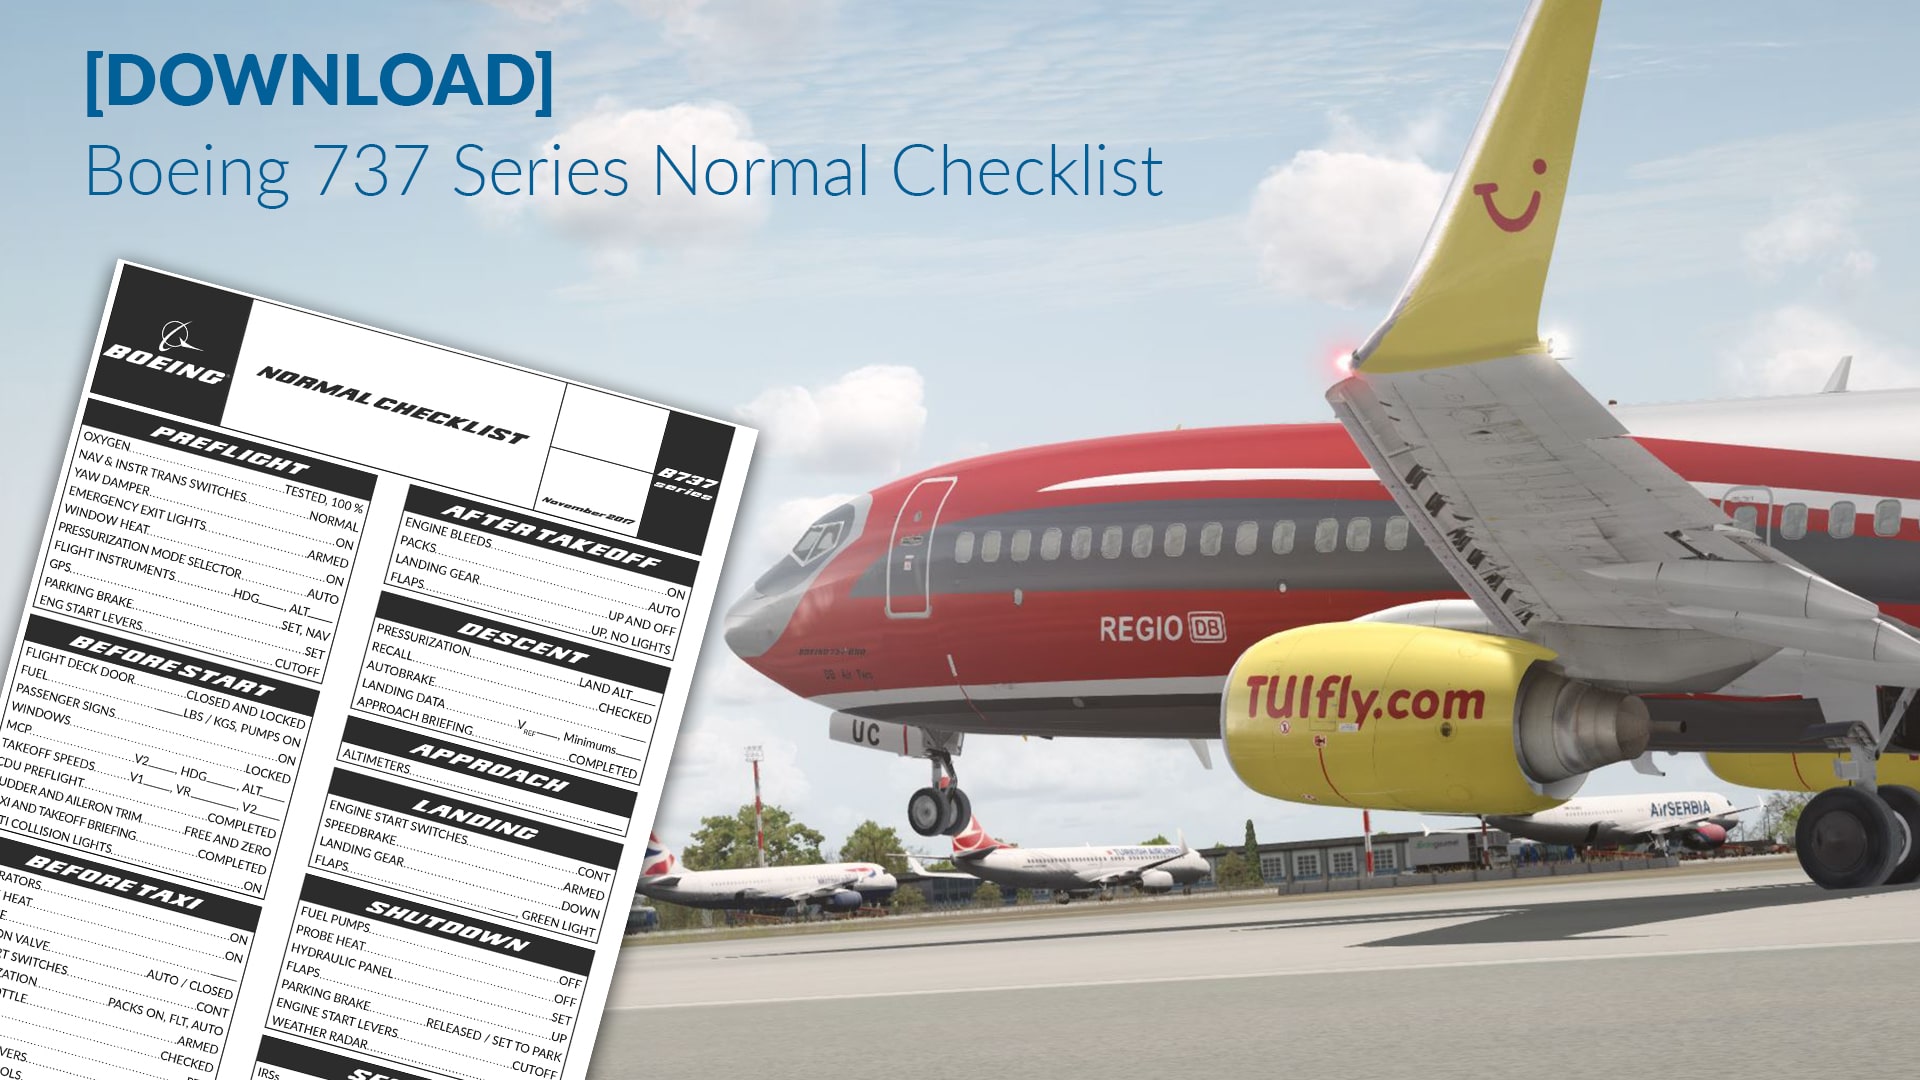 [DOWNLOAD] Boeing 737 Series Checklist – Normal Procedures